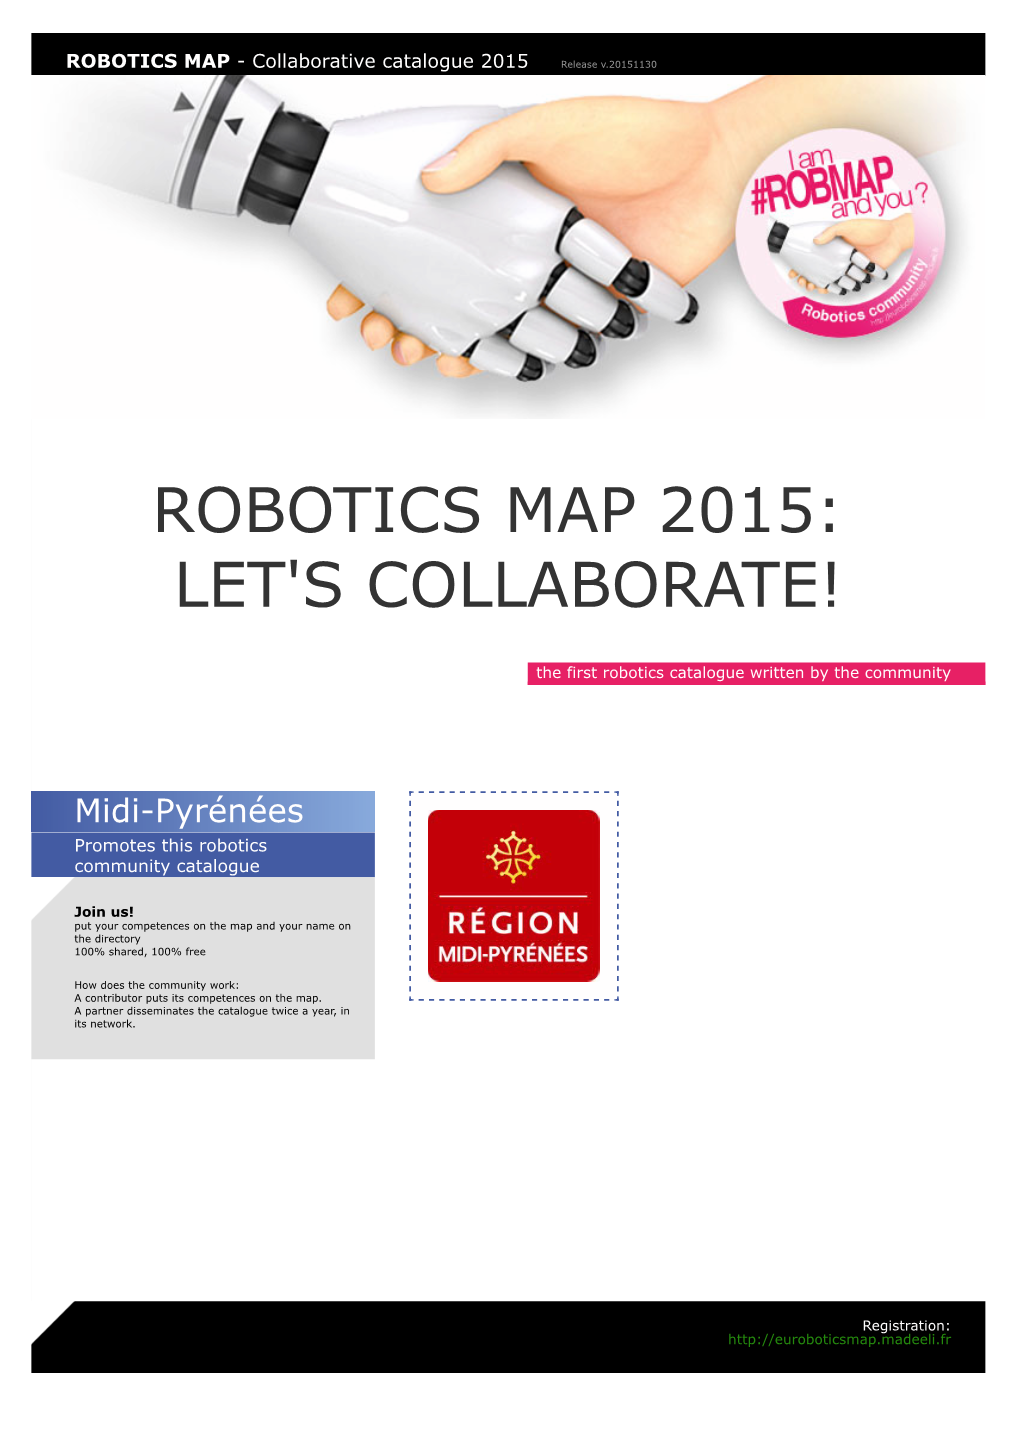 Robotics Map 2015: Let's Collaborate!